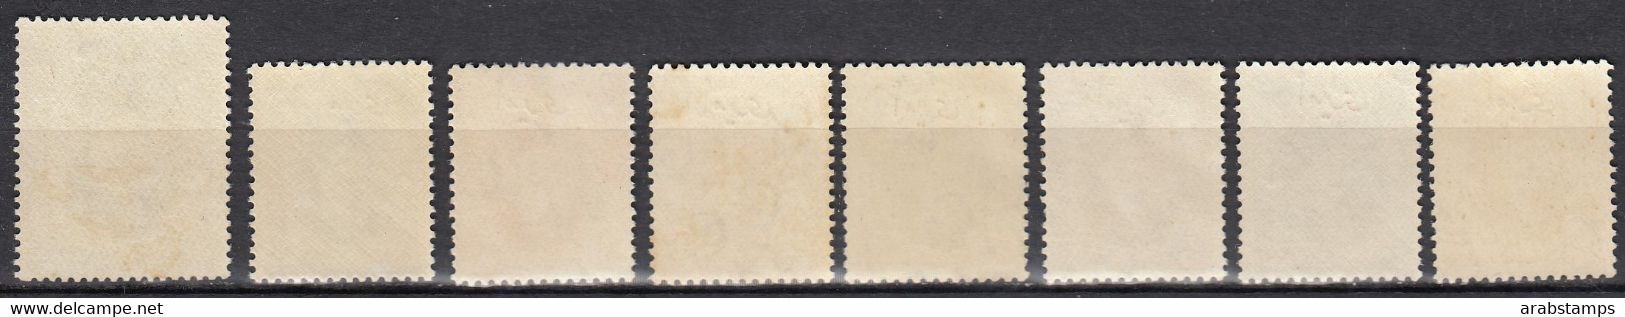 1924 Egypt King Fouad Regular Issue Overprinted AMIRI Complete Set 8 Values Very Rare MNH - Unused Stamps